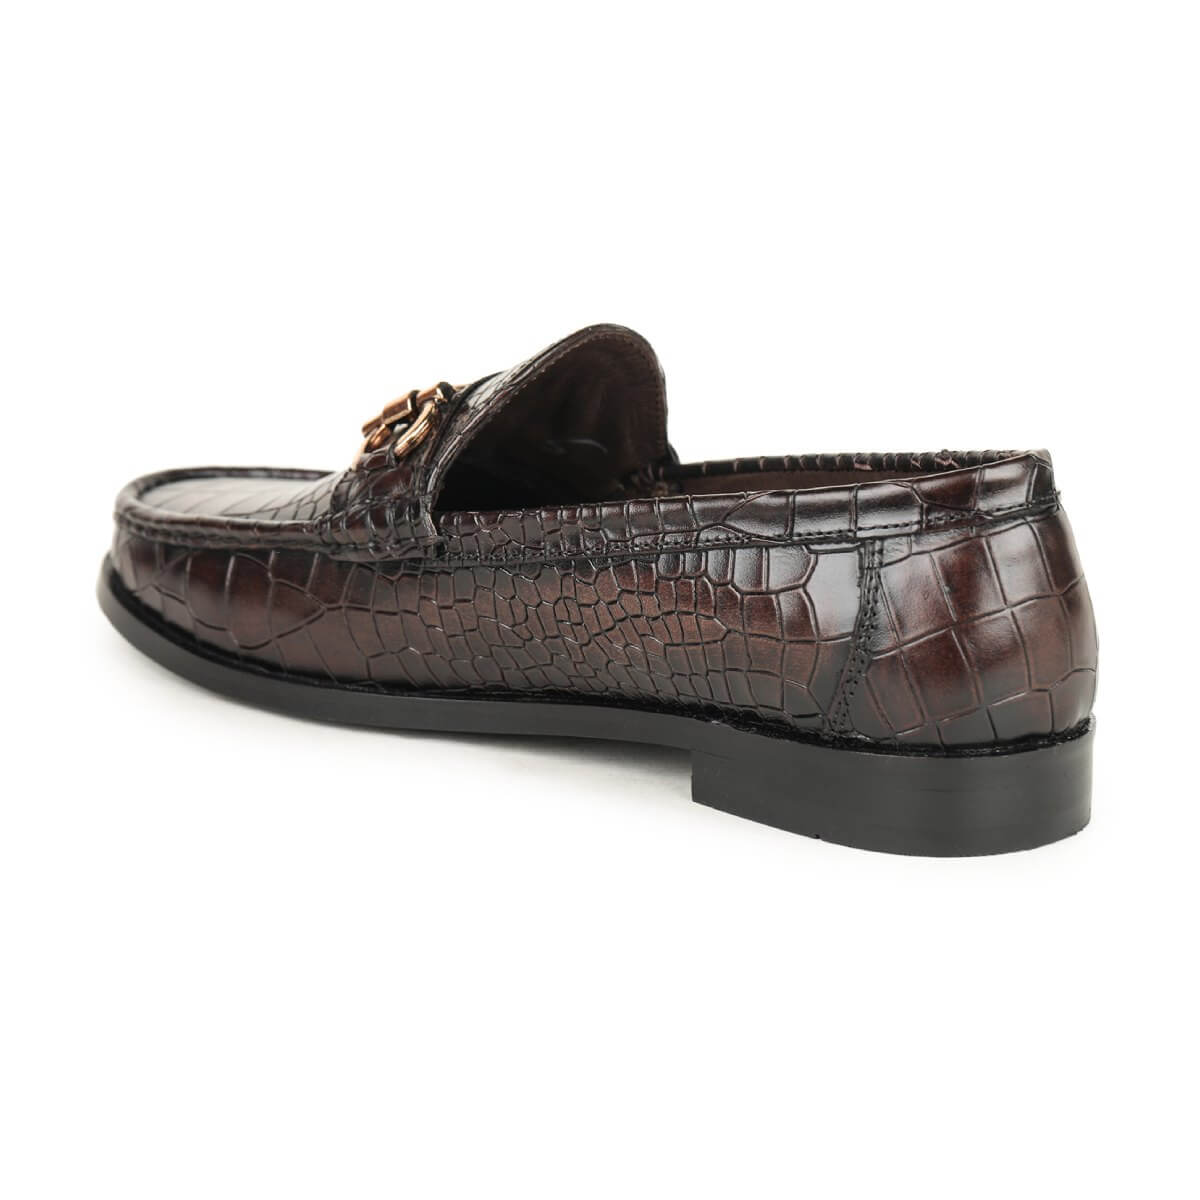 crocs loafer shoes brown_5